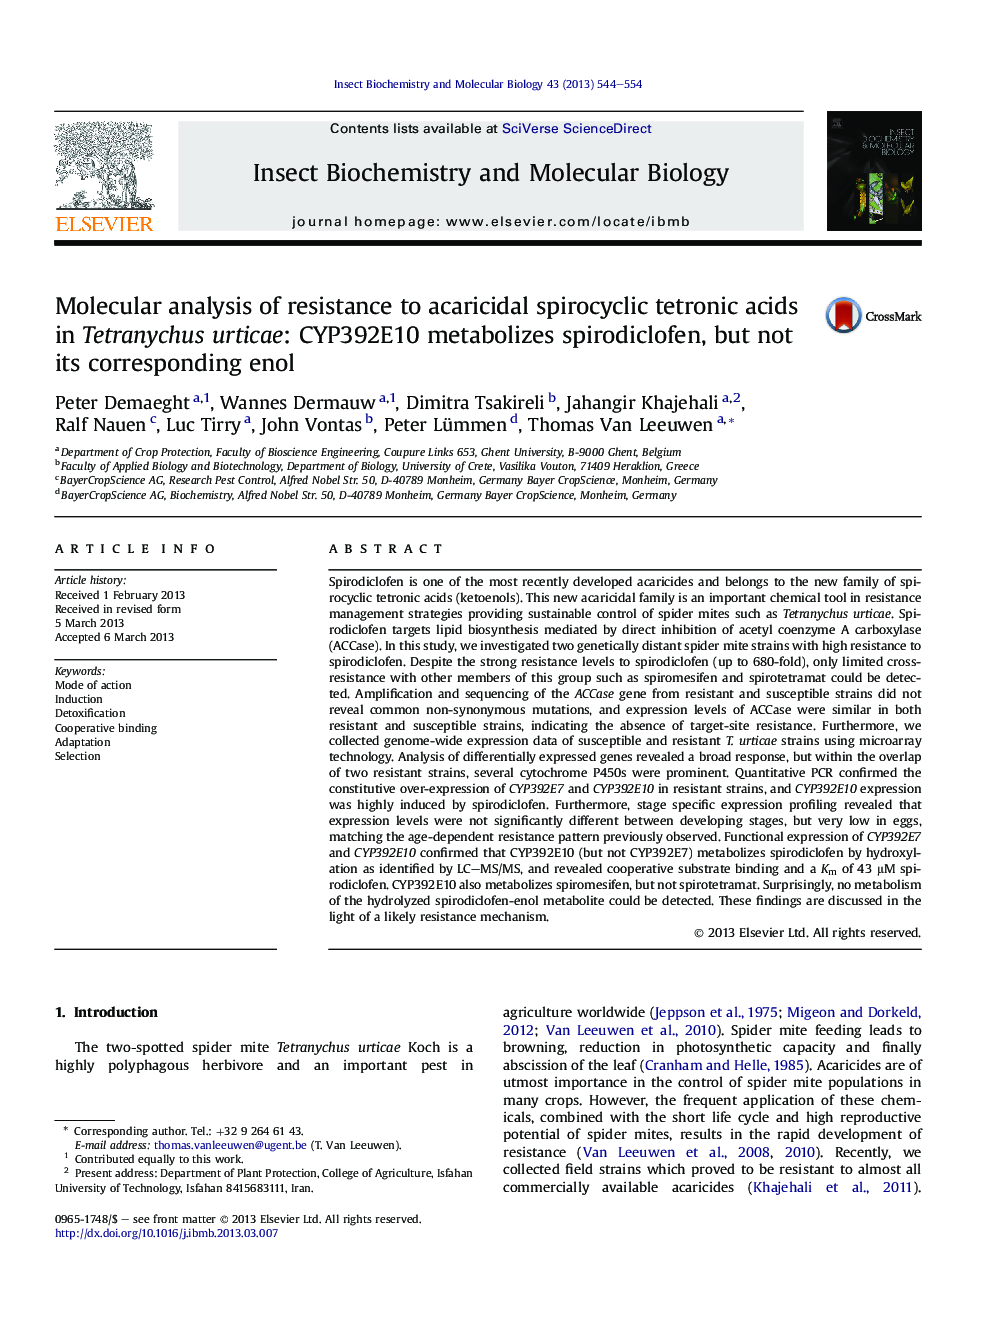 Molecular analysis of resistance to acaricidal spirocyclic tetronic acids in Tetranychus urticae: CYP392E10 metabolizes spirodiclofen, but not its corresponding enol